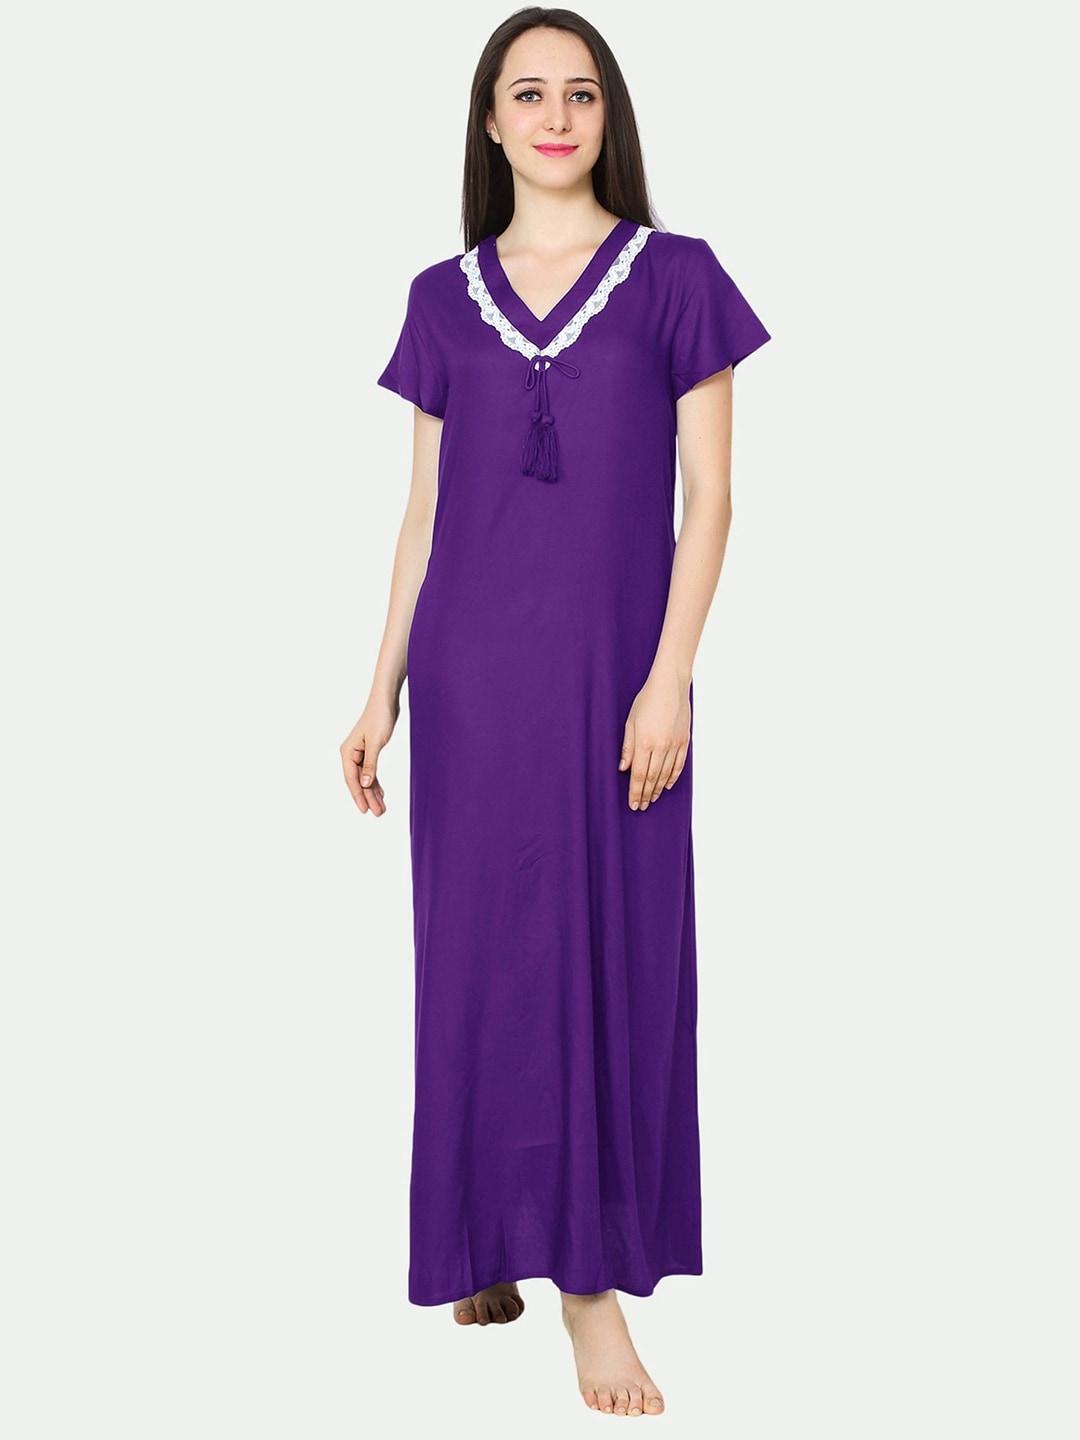 patrorna women solid v-neck cotton blend maxi nightdress